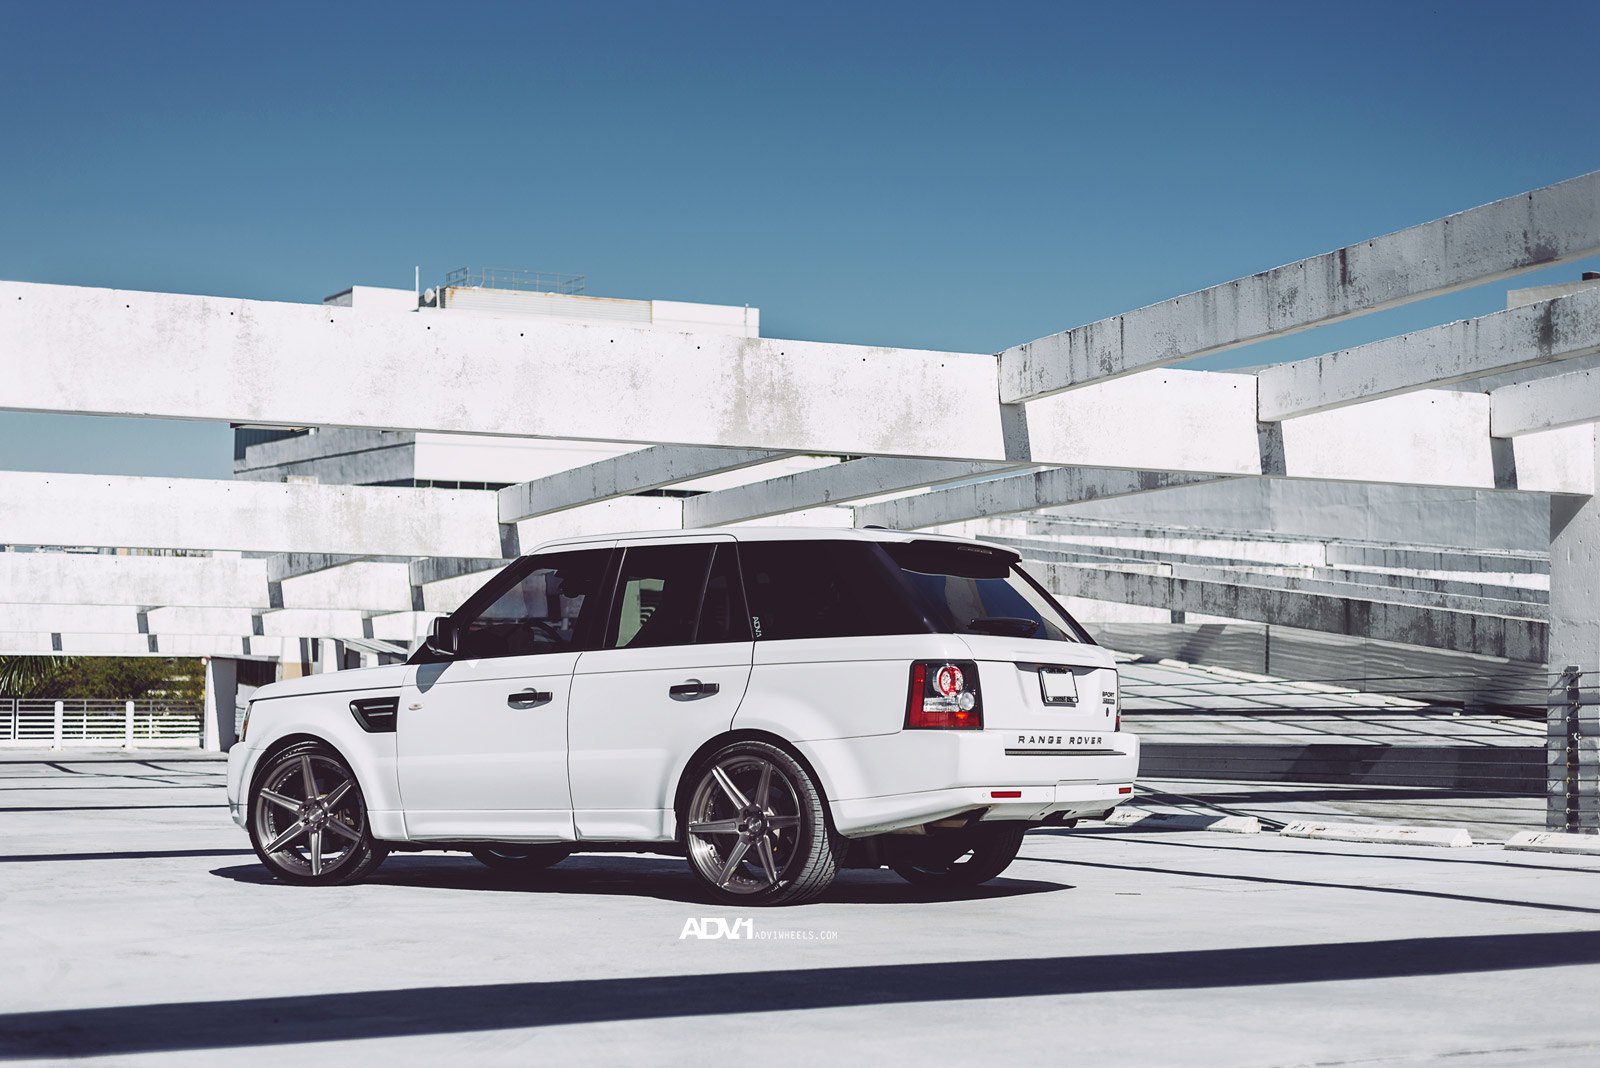 Roofline Spoiler with Light on White Range Rover Sport - Photo by ADV.1